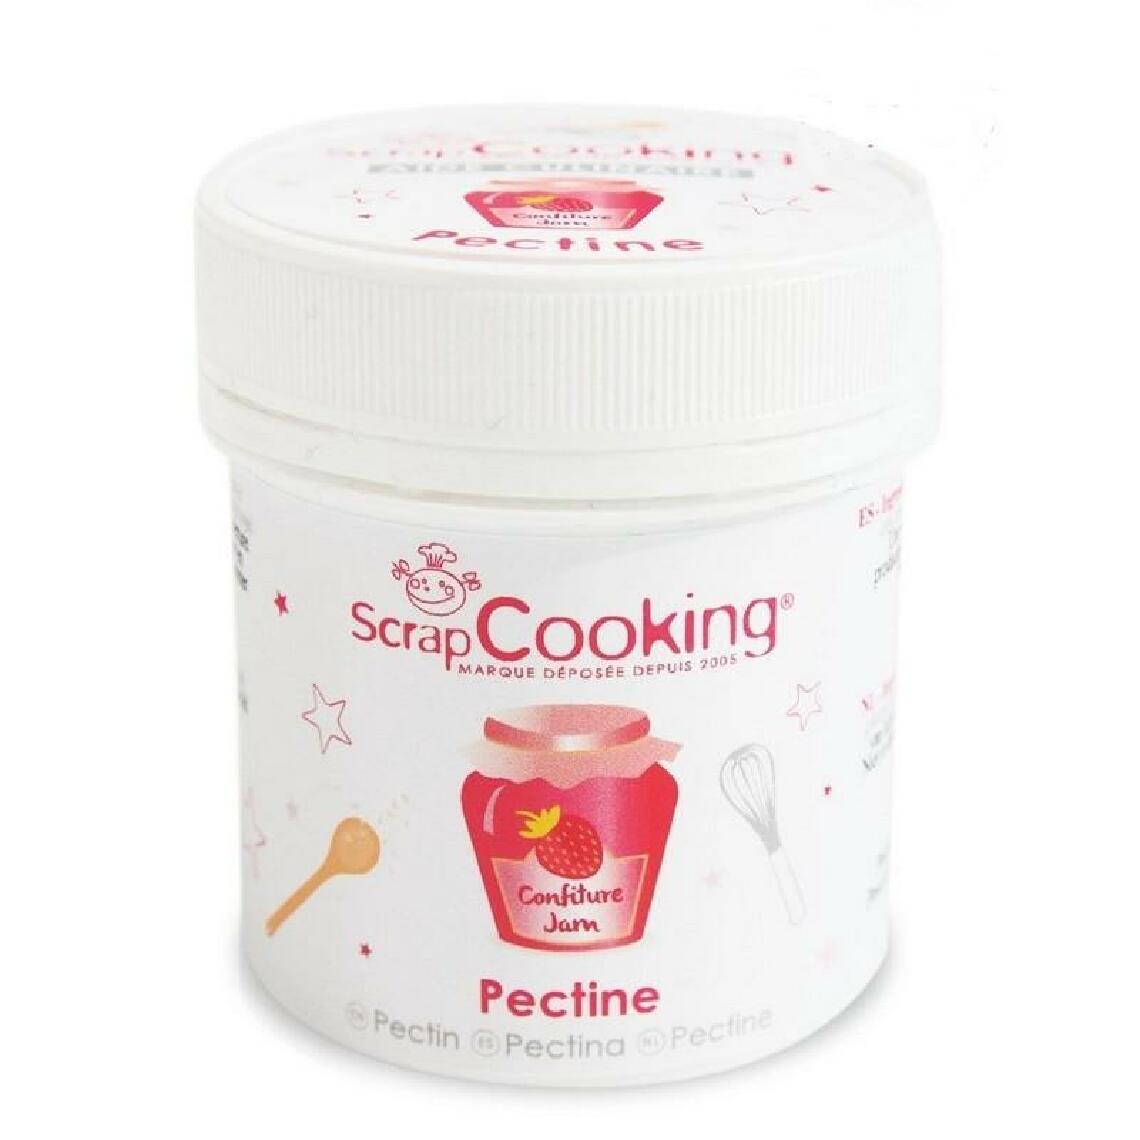 Scrapcooking - Pectine - Pot 50 g - Kits créatifs